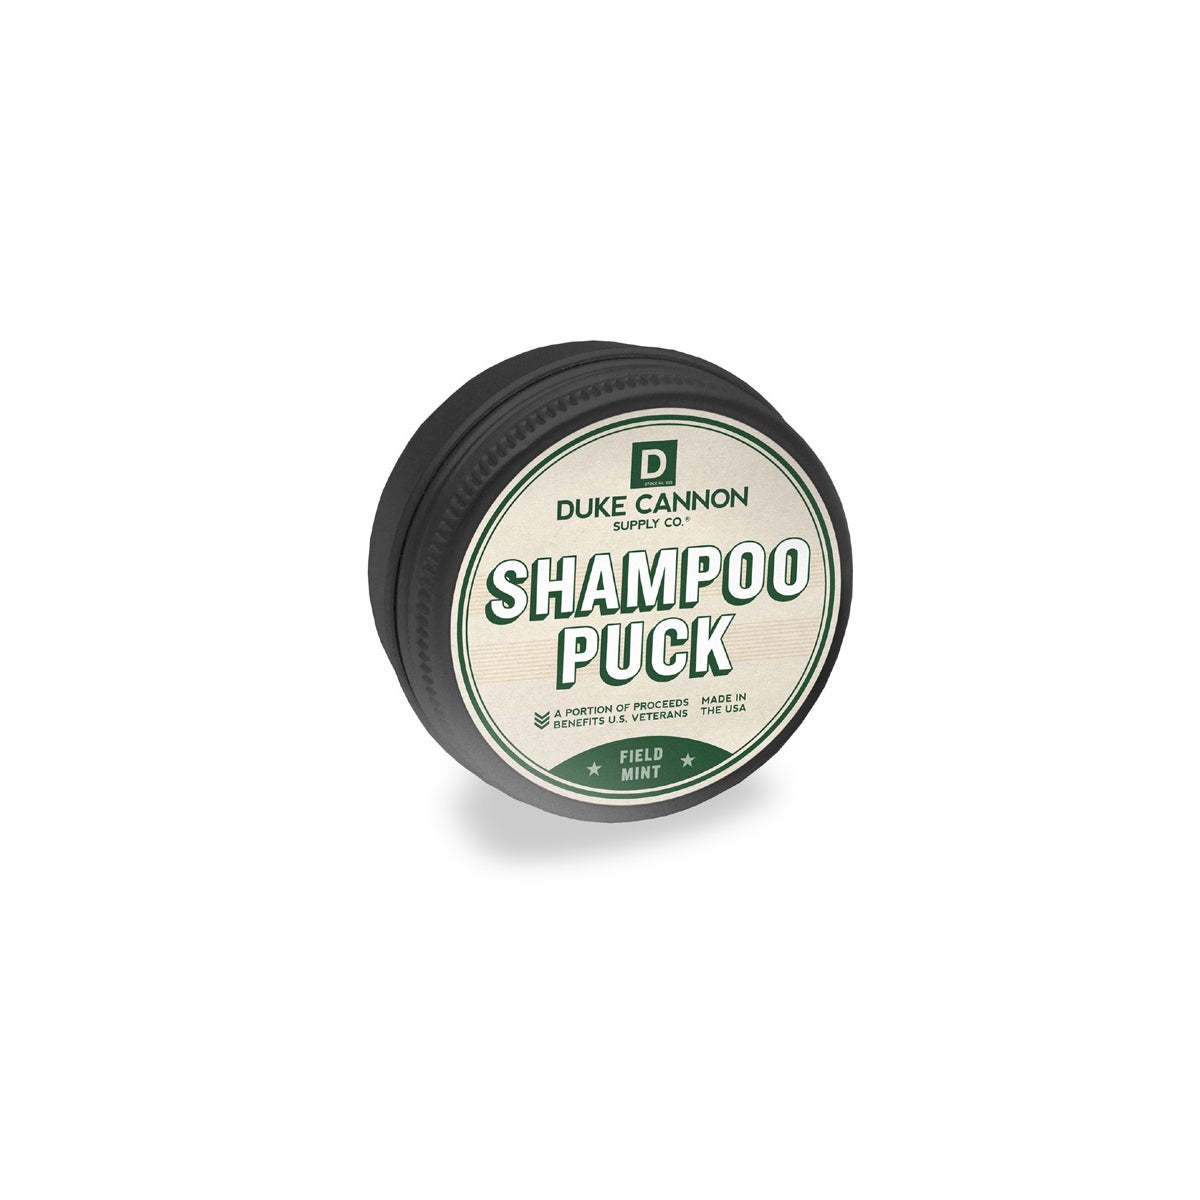 Shampoo Puck Field Mint - Scent: Eucalyptus Peppermint